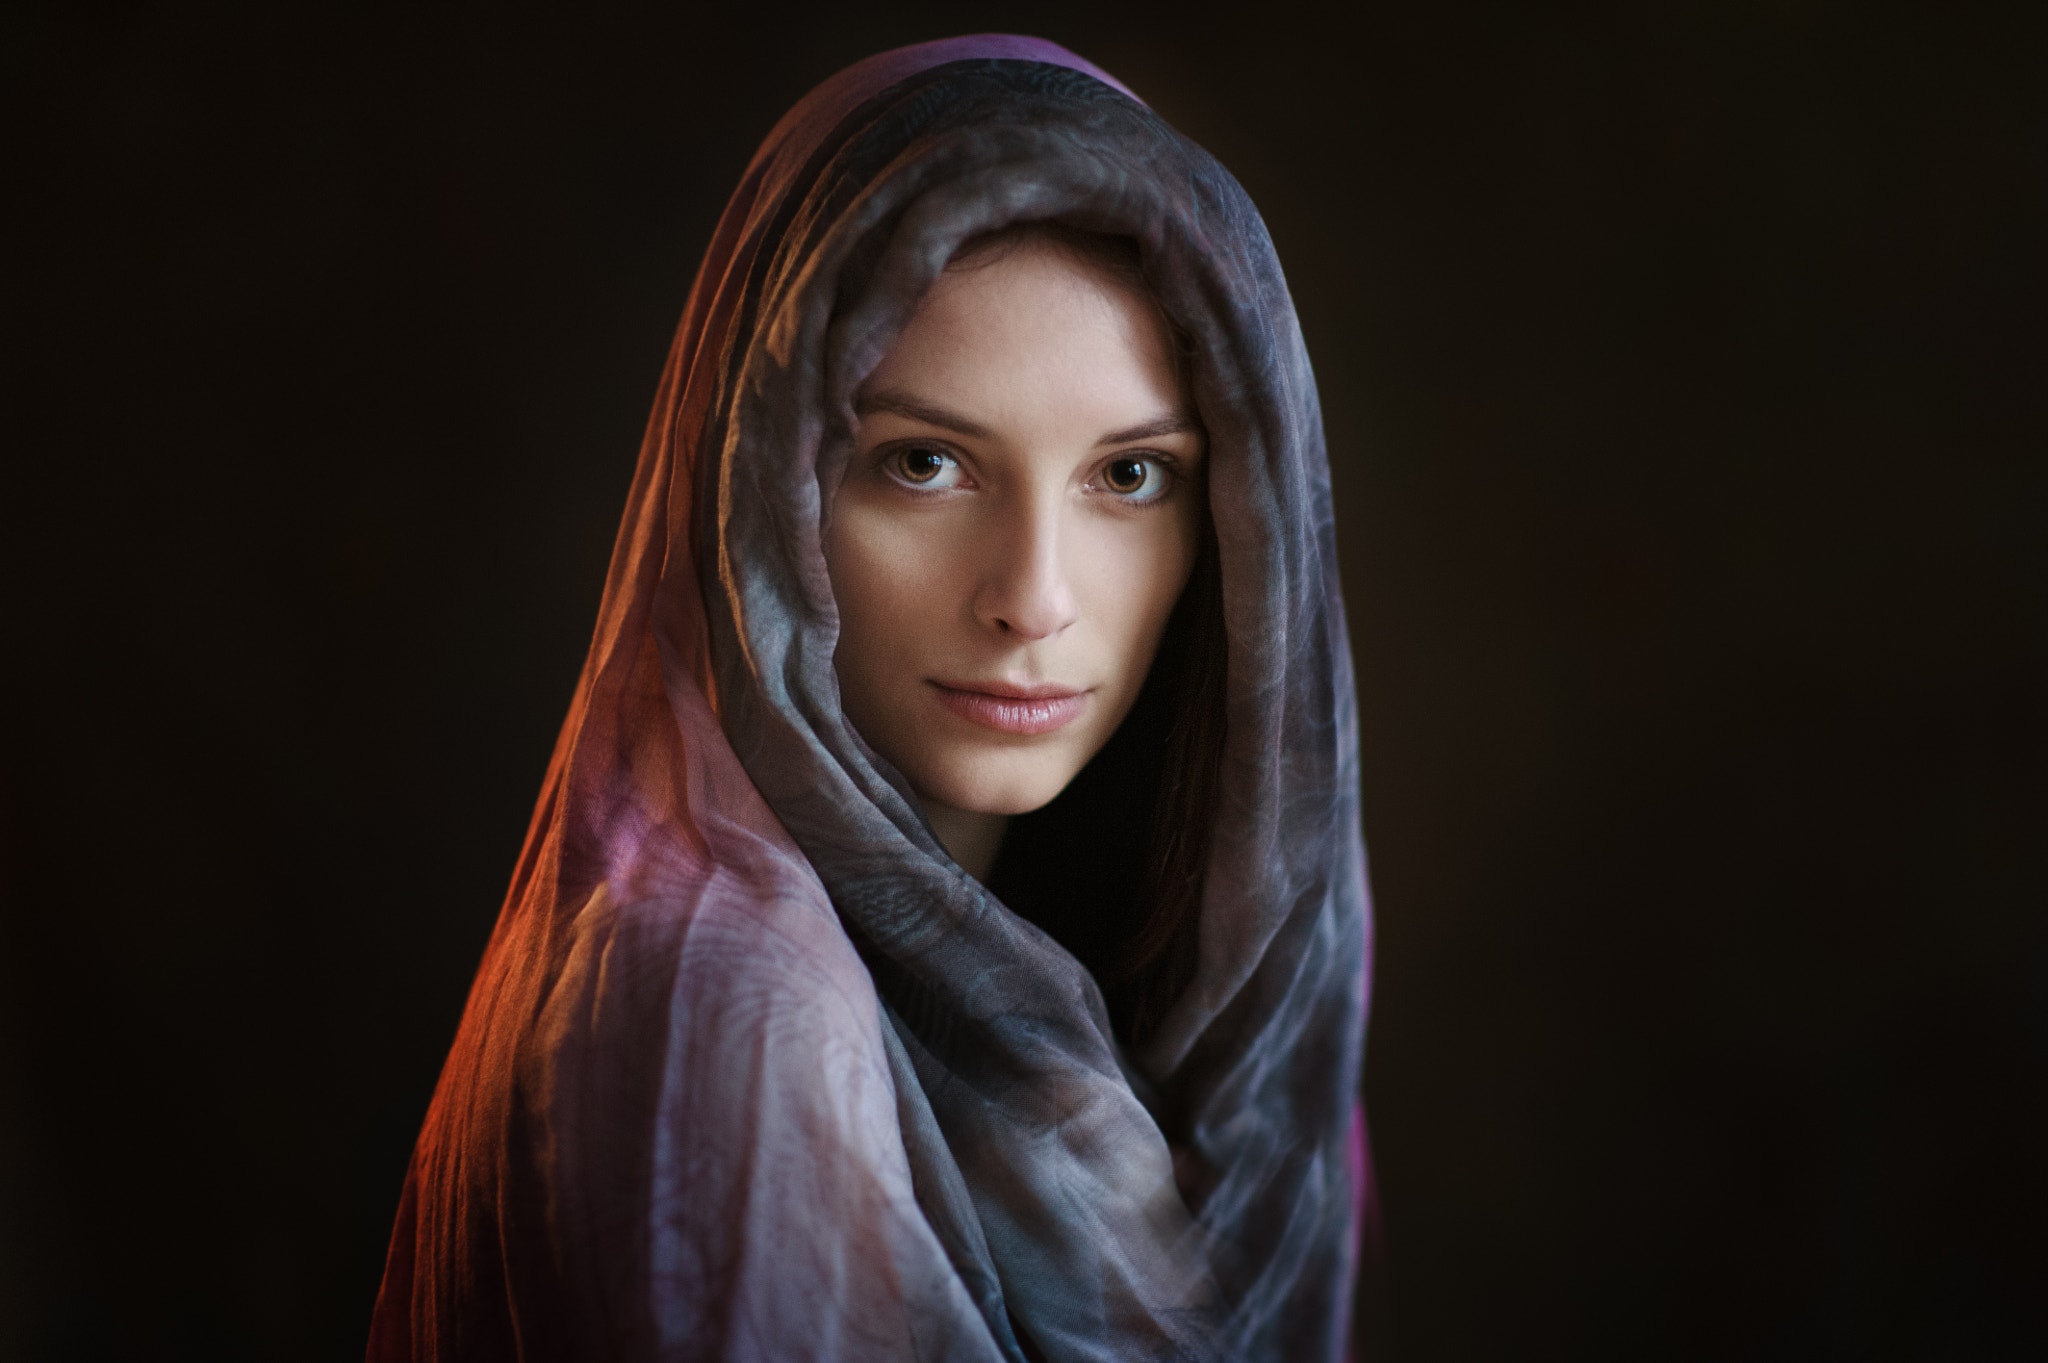 People 2048x1363 Maxim Maximov women hoods face portrait model 500px